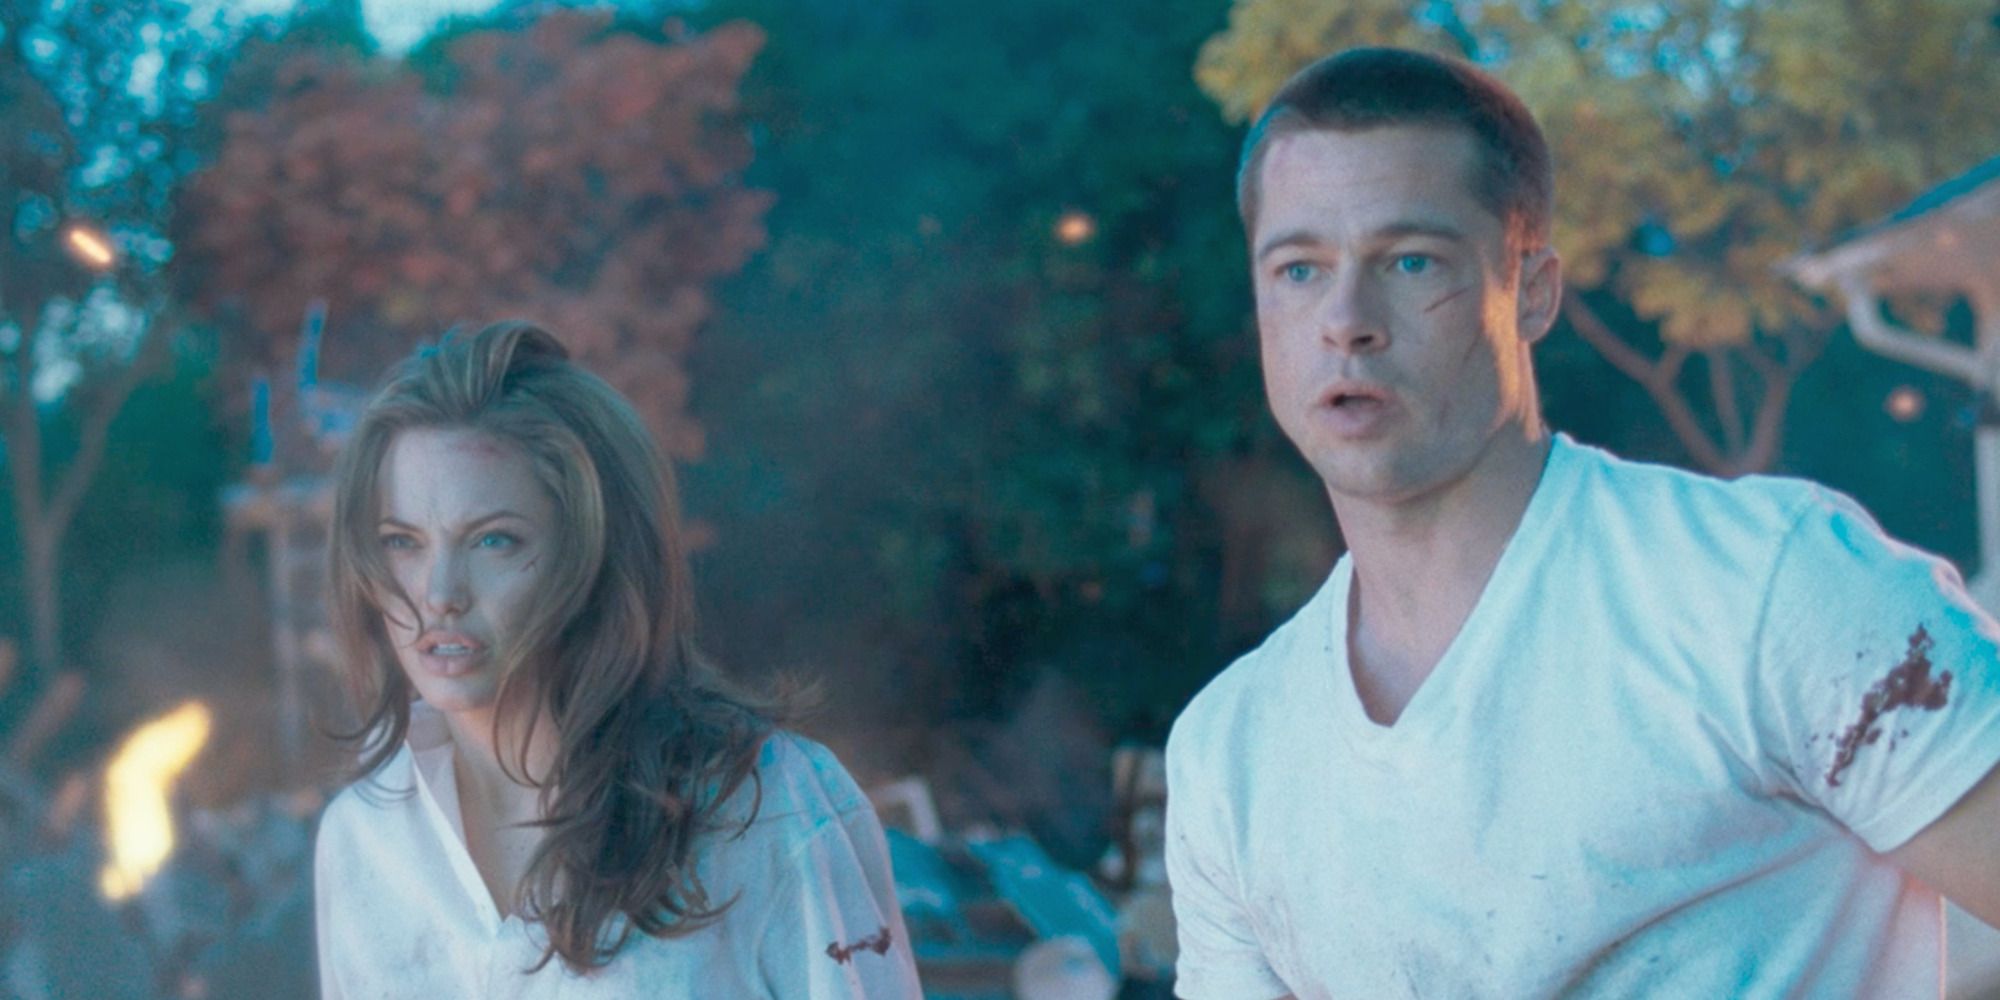 Jane (Angelina Jolie) and John (Brad Pitt) watch their burning home on Mr. & Mrs. Smith